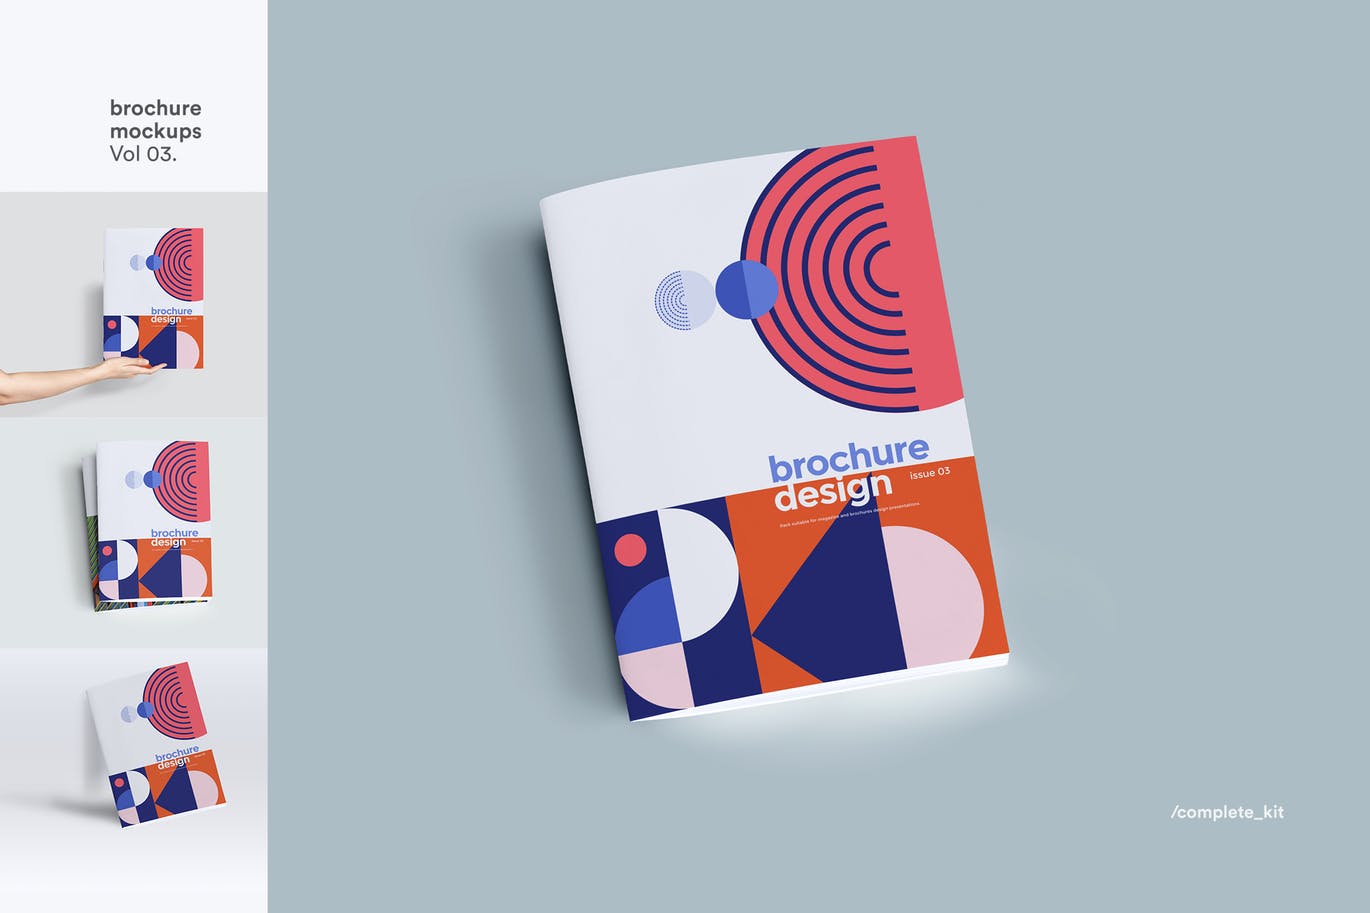 A set of colorful brochure mockup templates